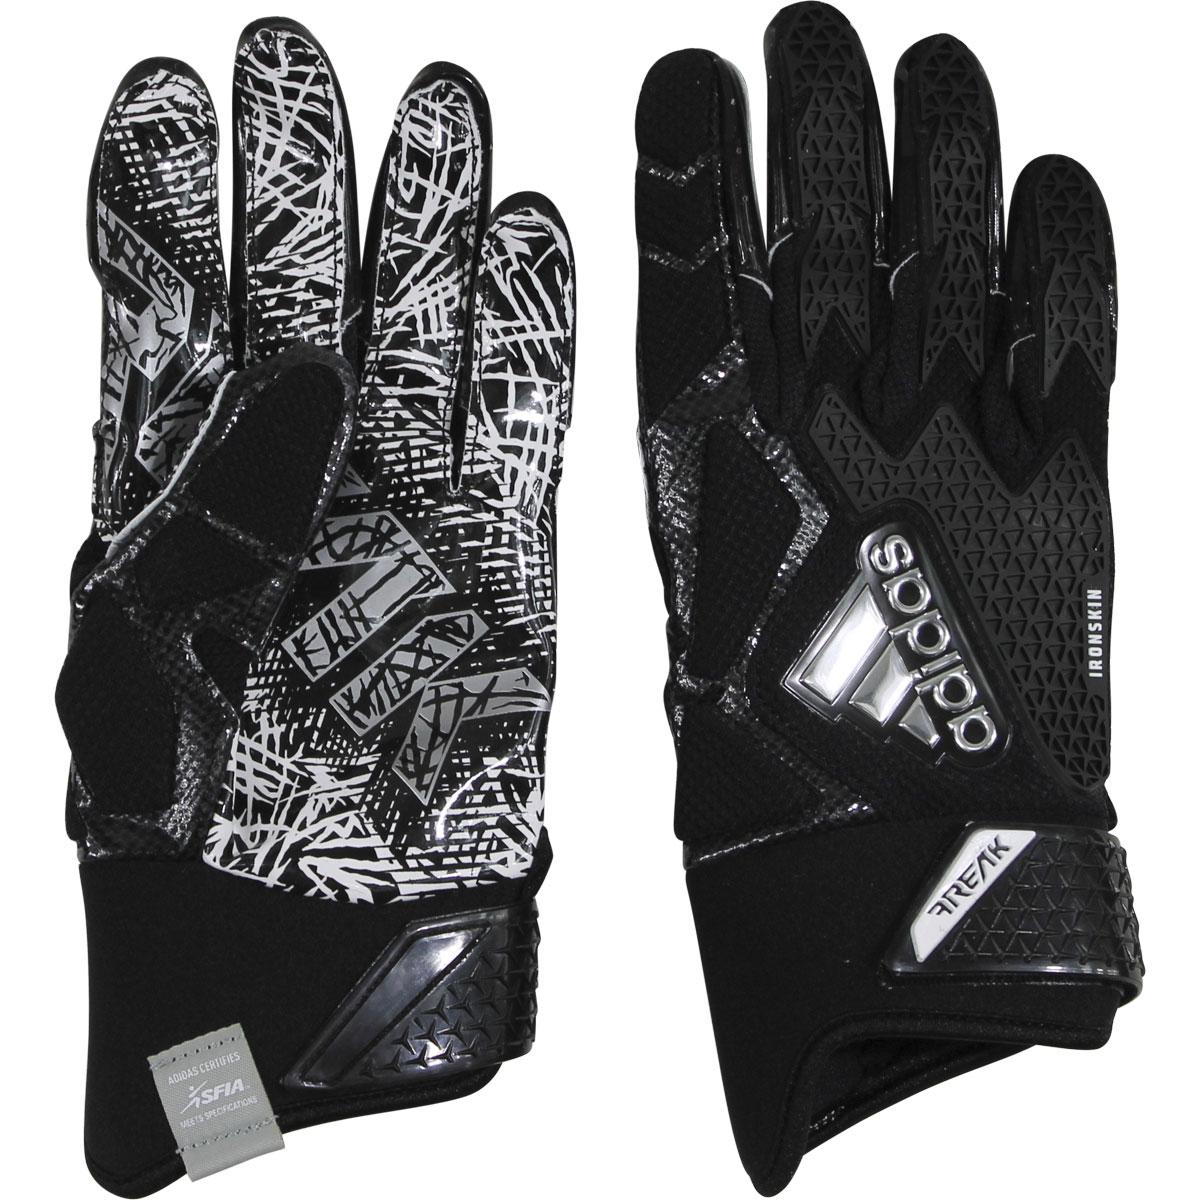 padded receiver gloves